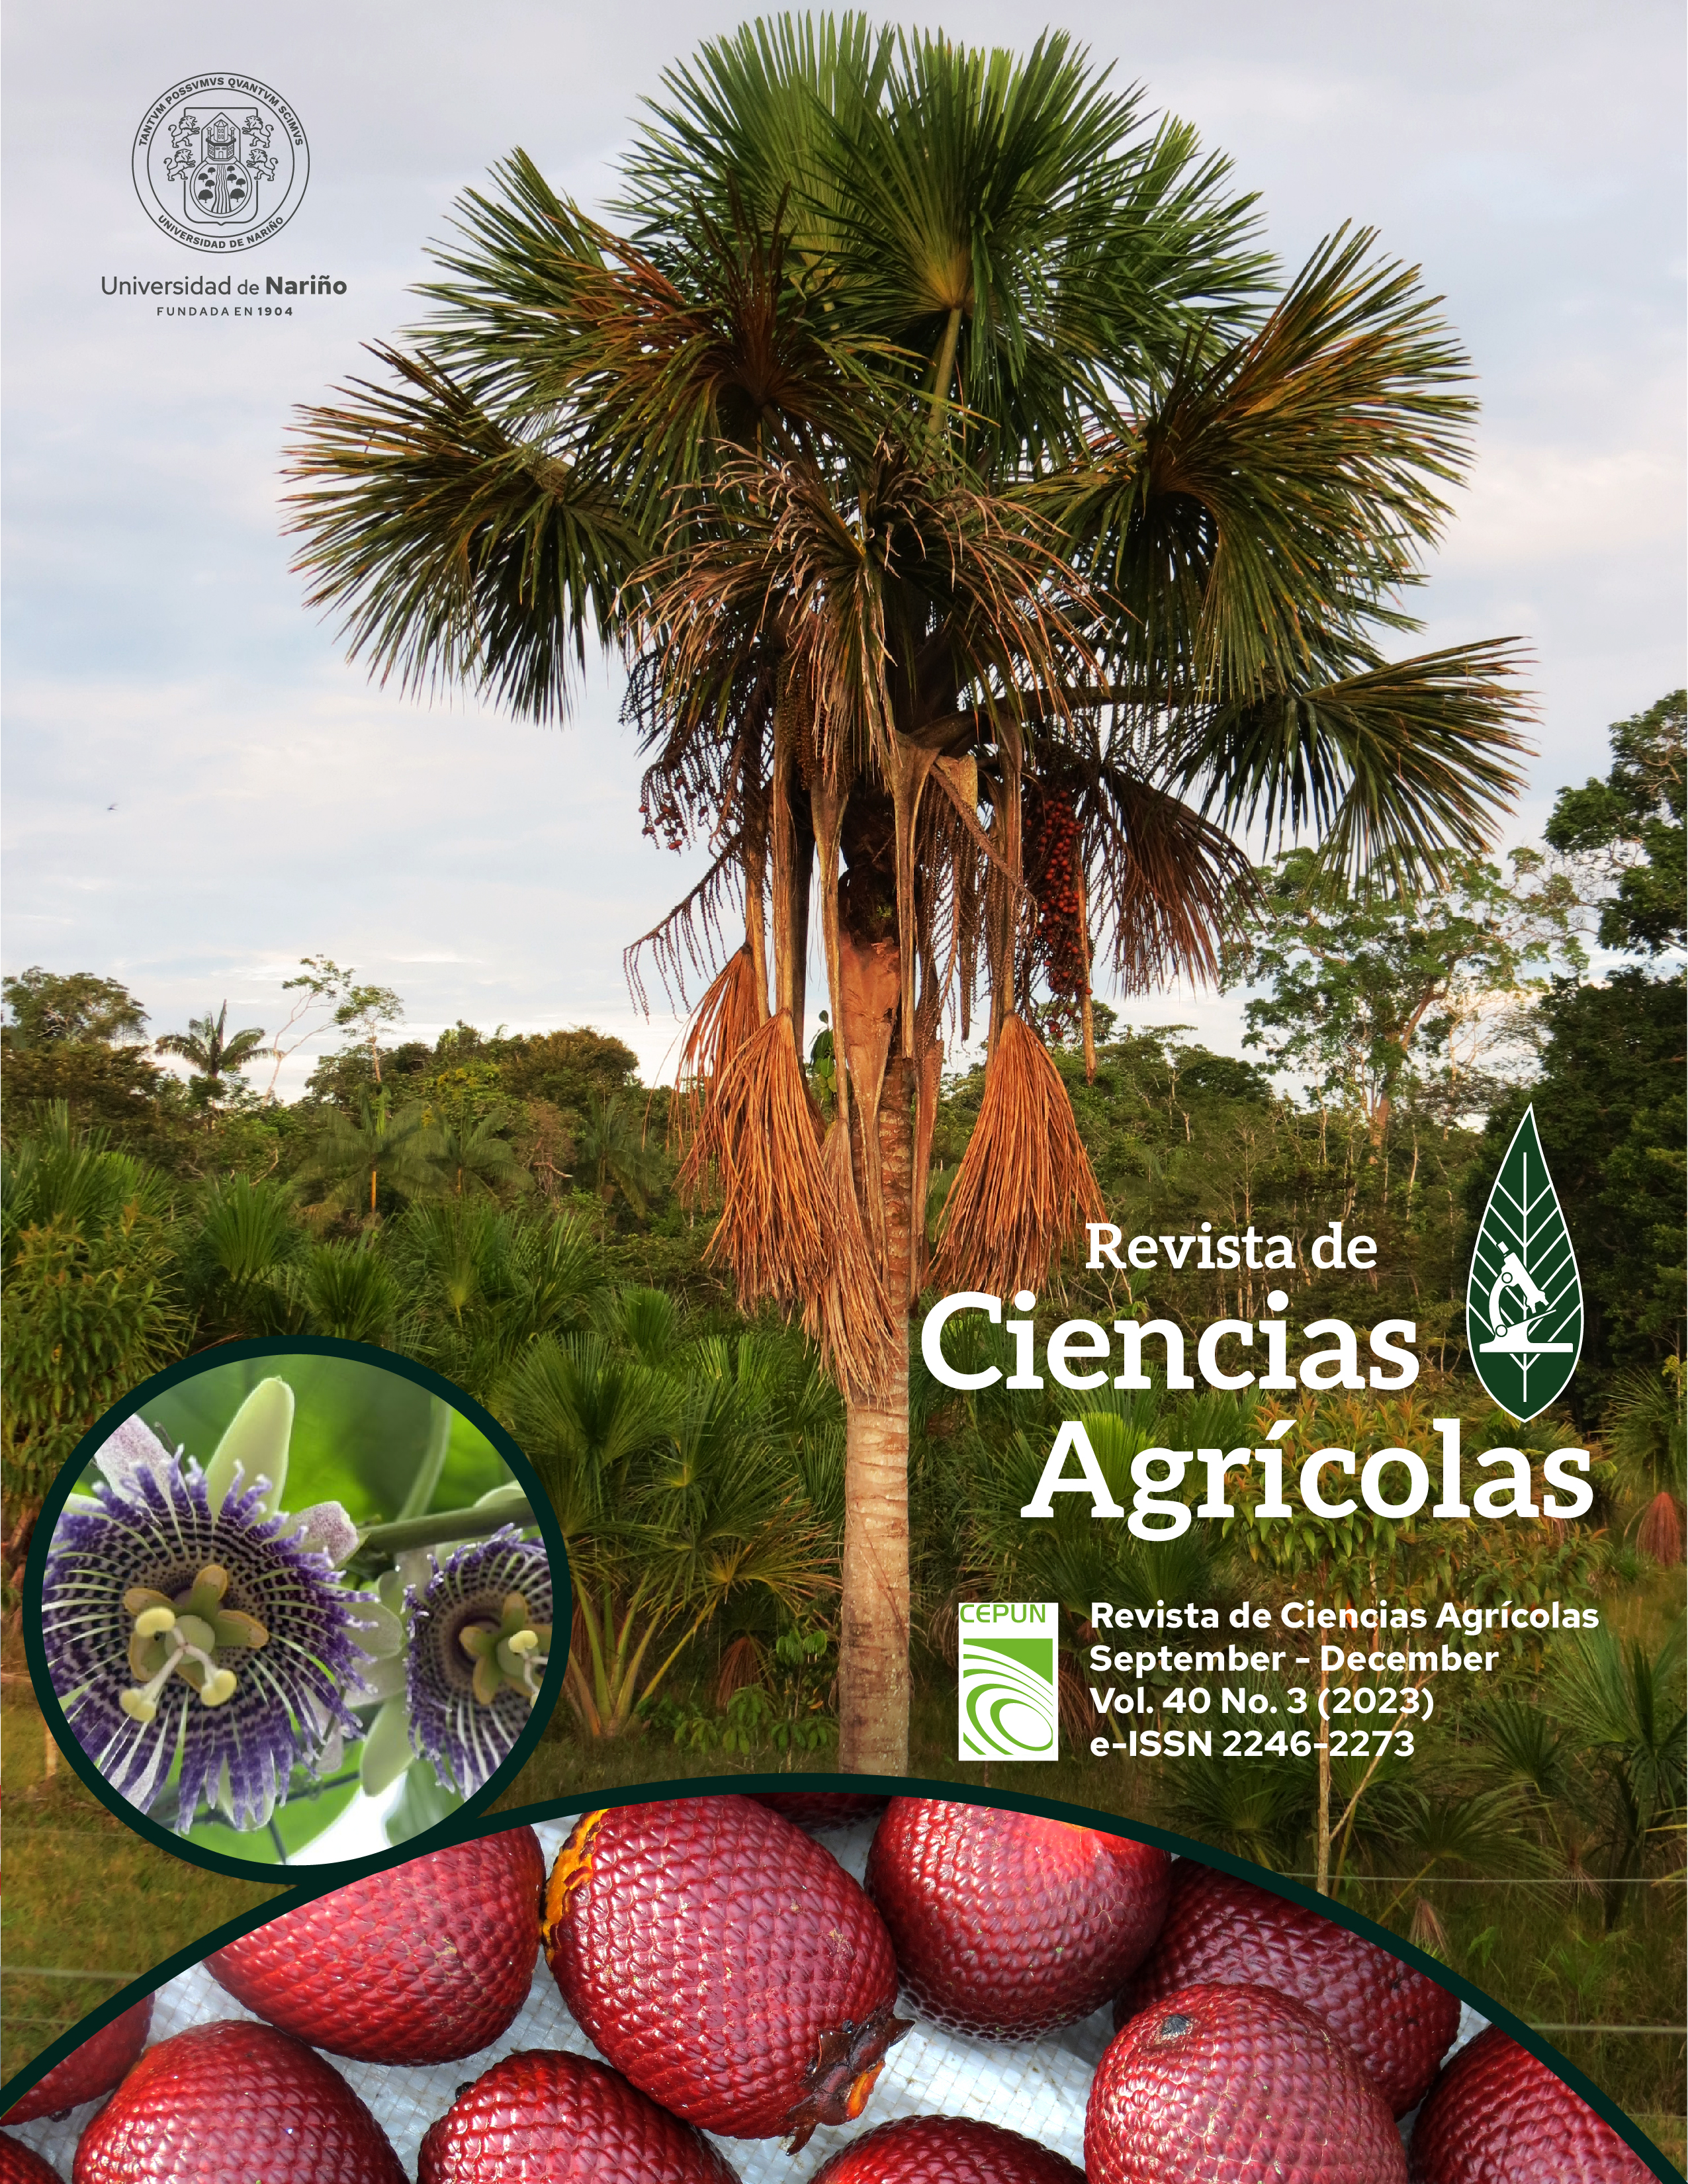 					View Vol. 40 No. 3 (2023):  Revista de Ciencias Agrícolas - Tercer semestre, Septiembre - Diciembre 2023
				